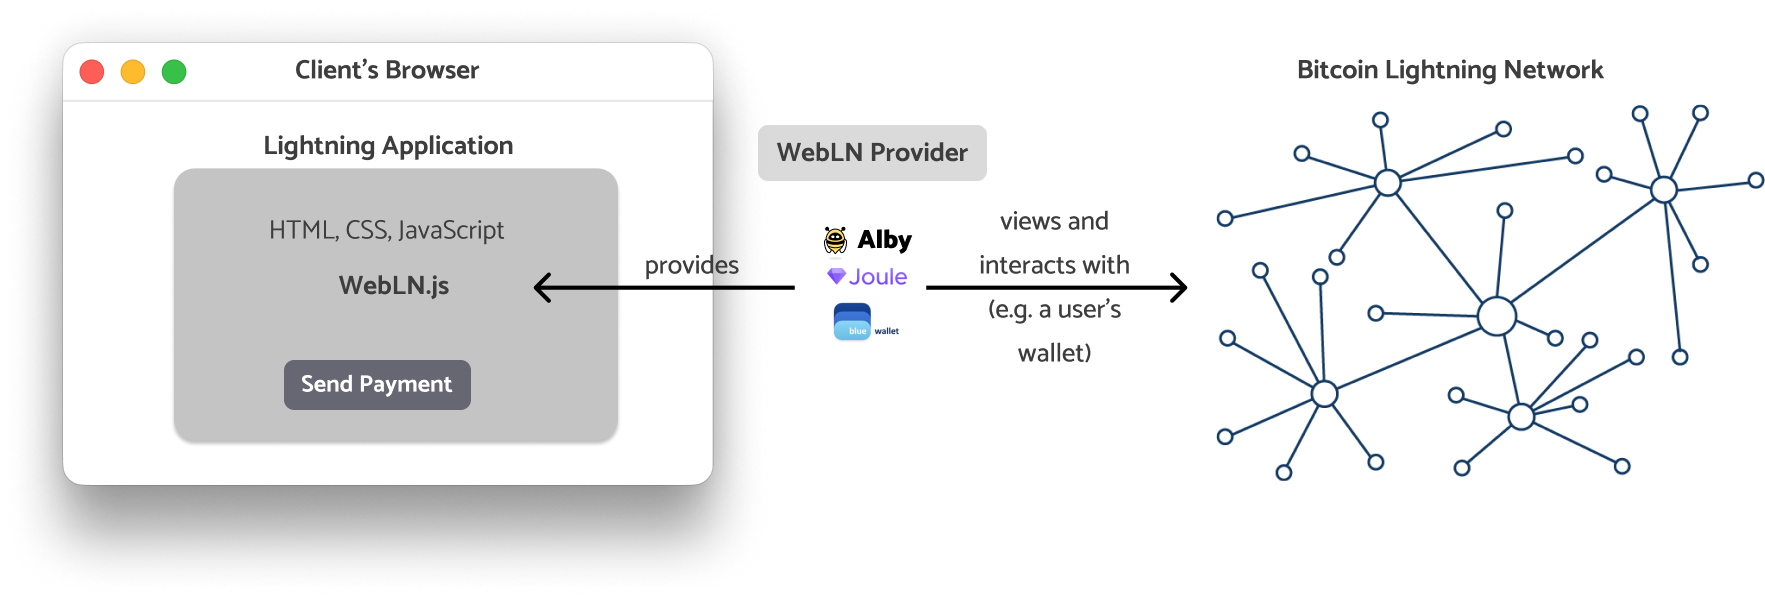 WebLN Provider Functionality